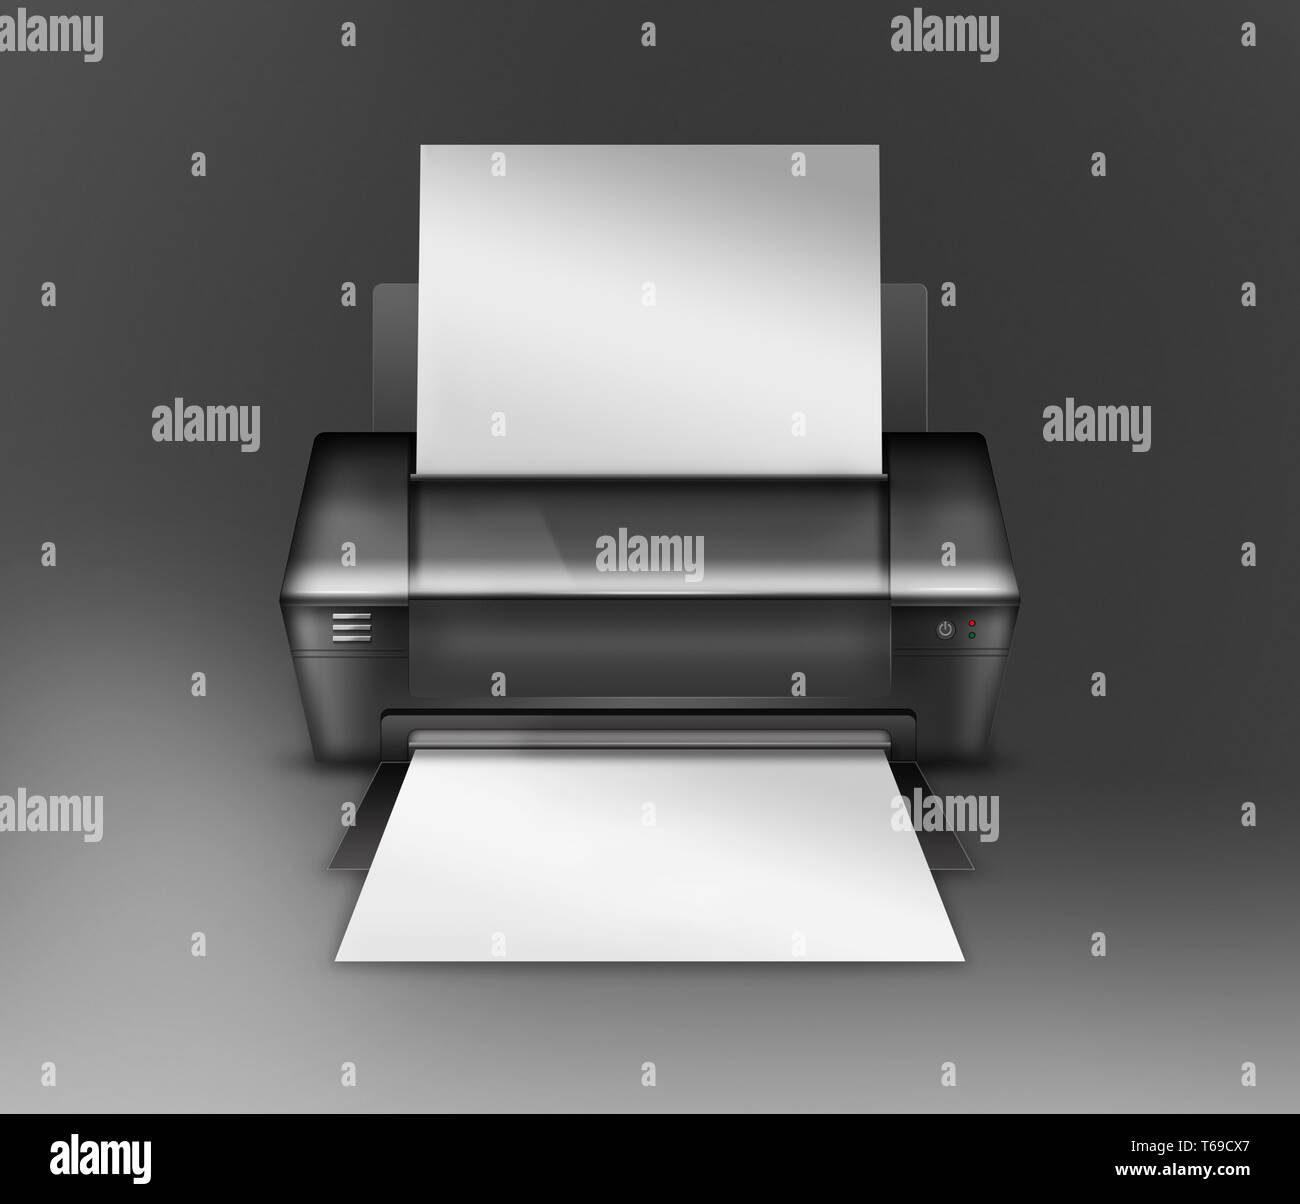 Realistic modern printer. Stock Photo